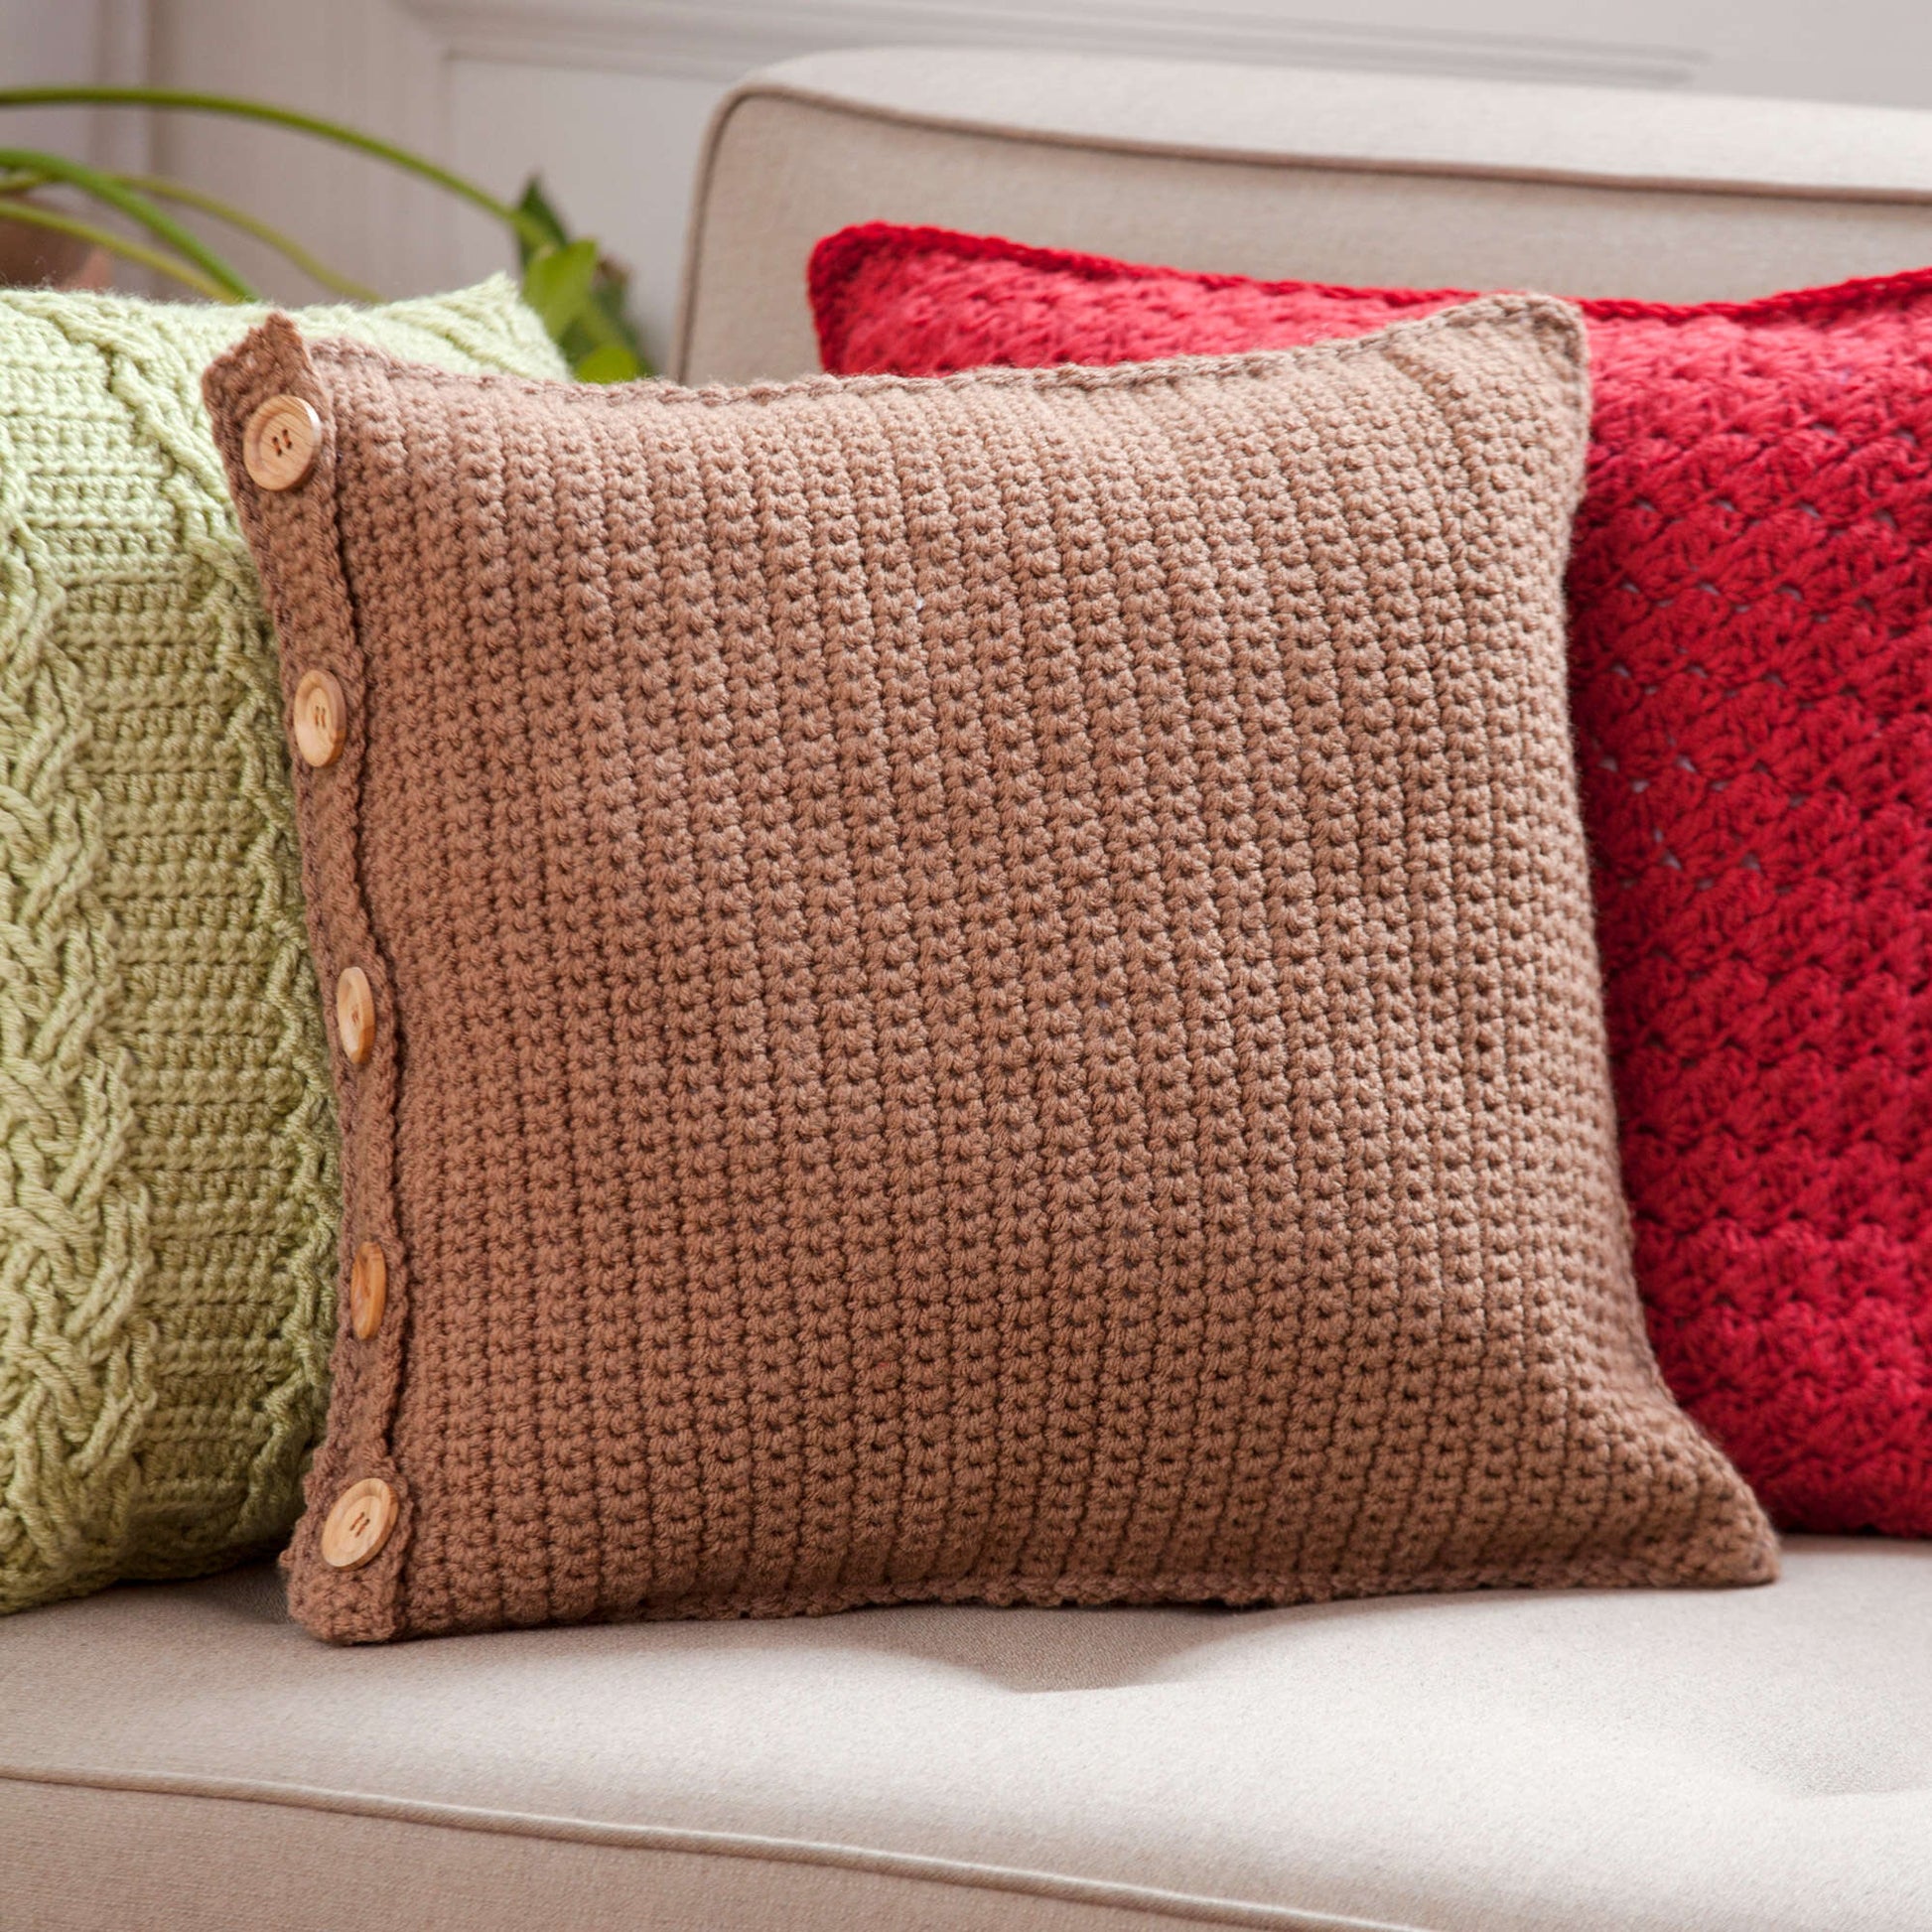 Free Red Heart Crochet Textured Pillow Trio Pattern